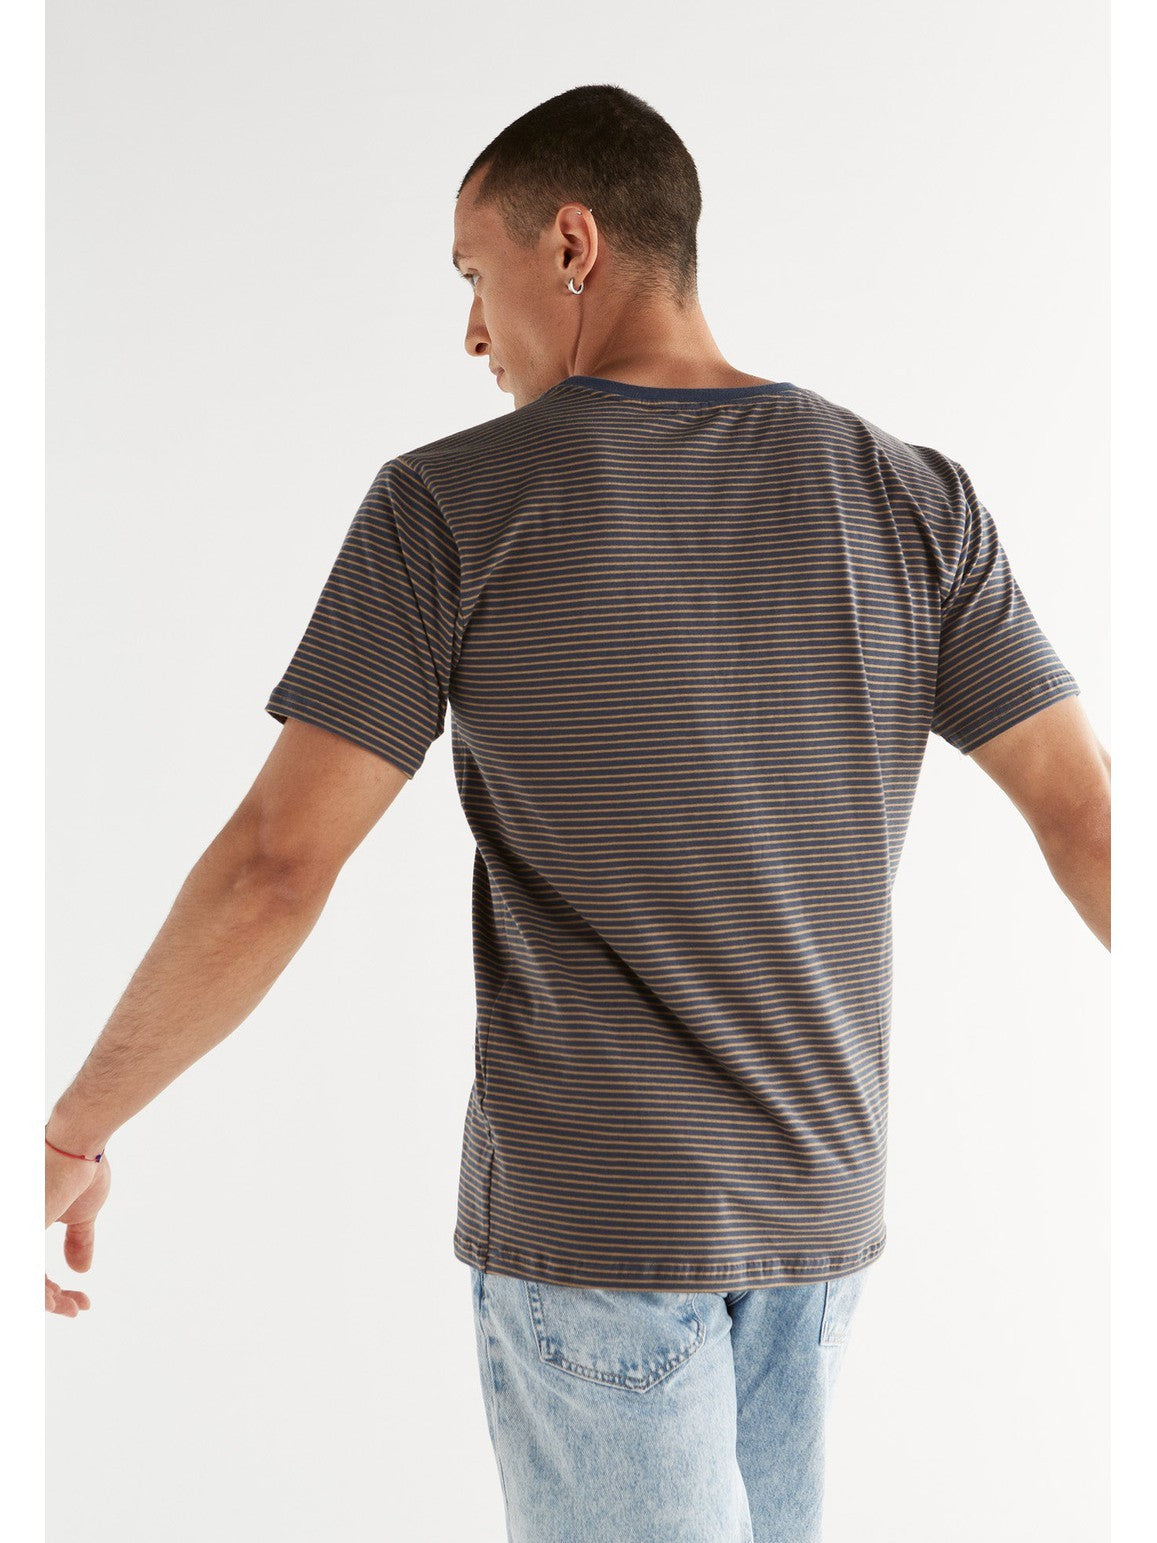 2218-055 | Herren Basic T-Shirt - Indigo-Ingwer